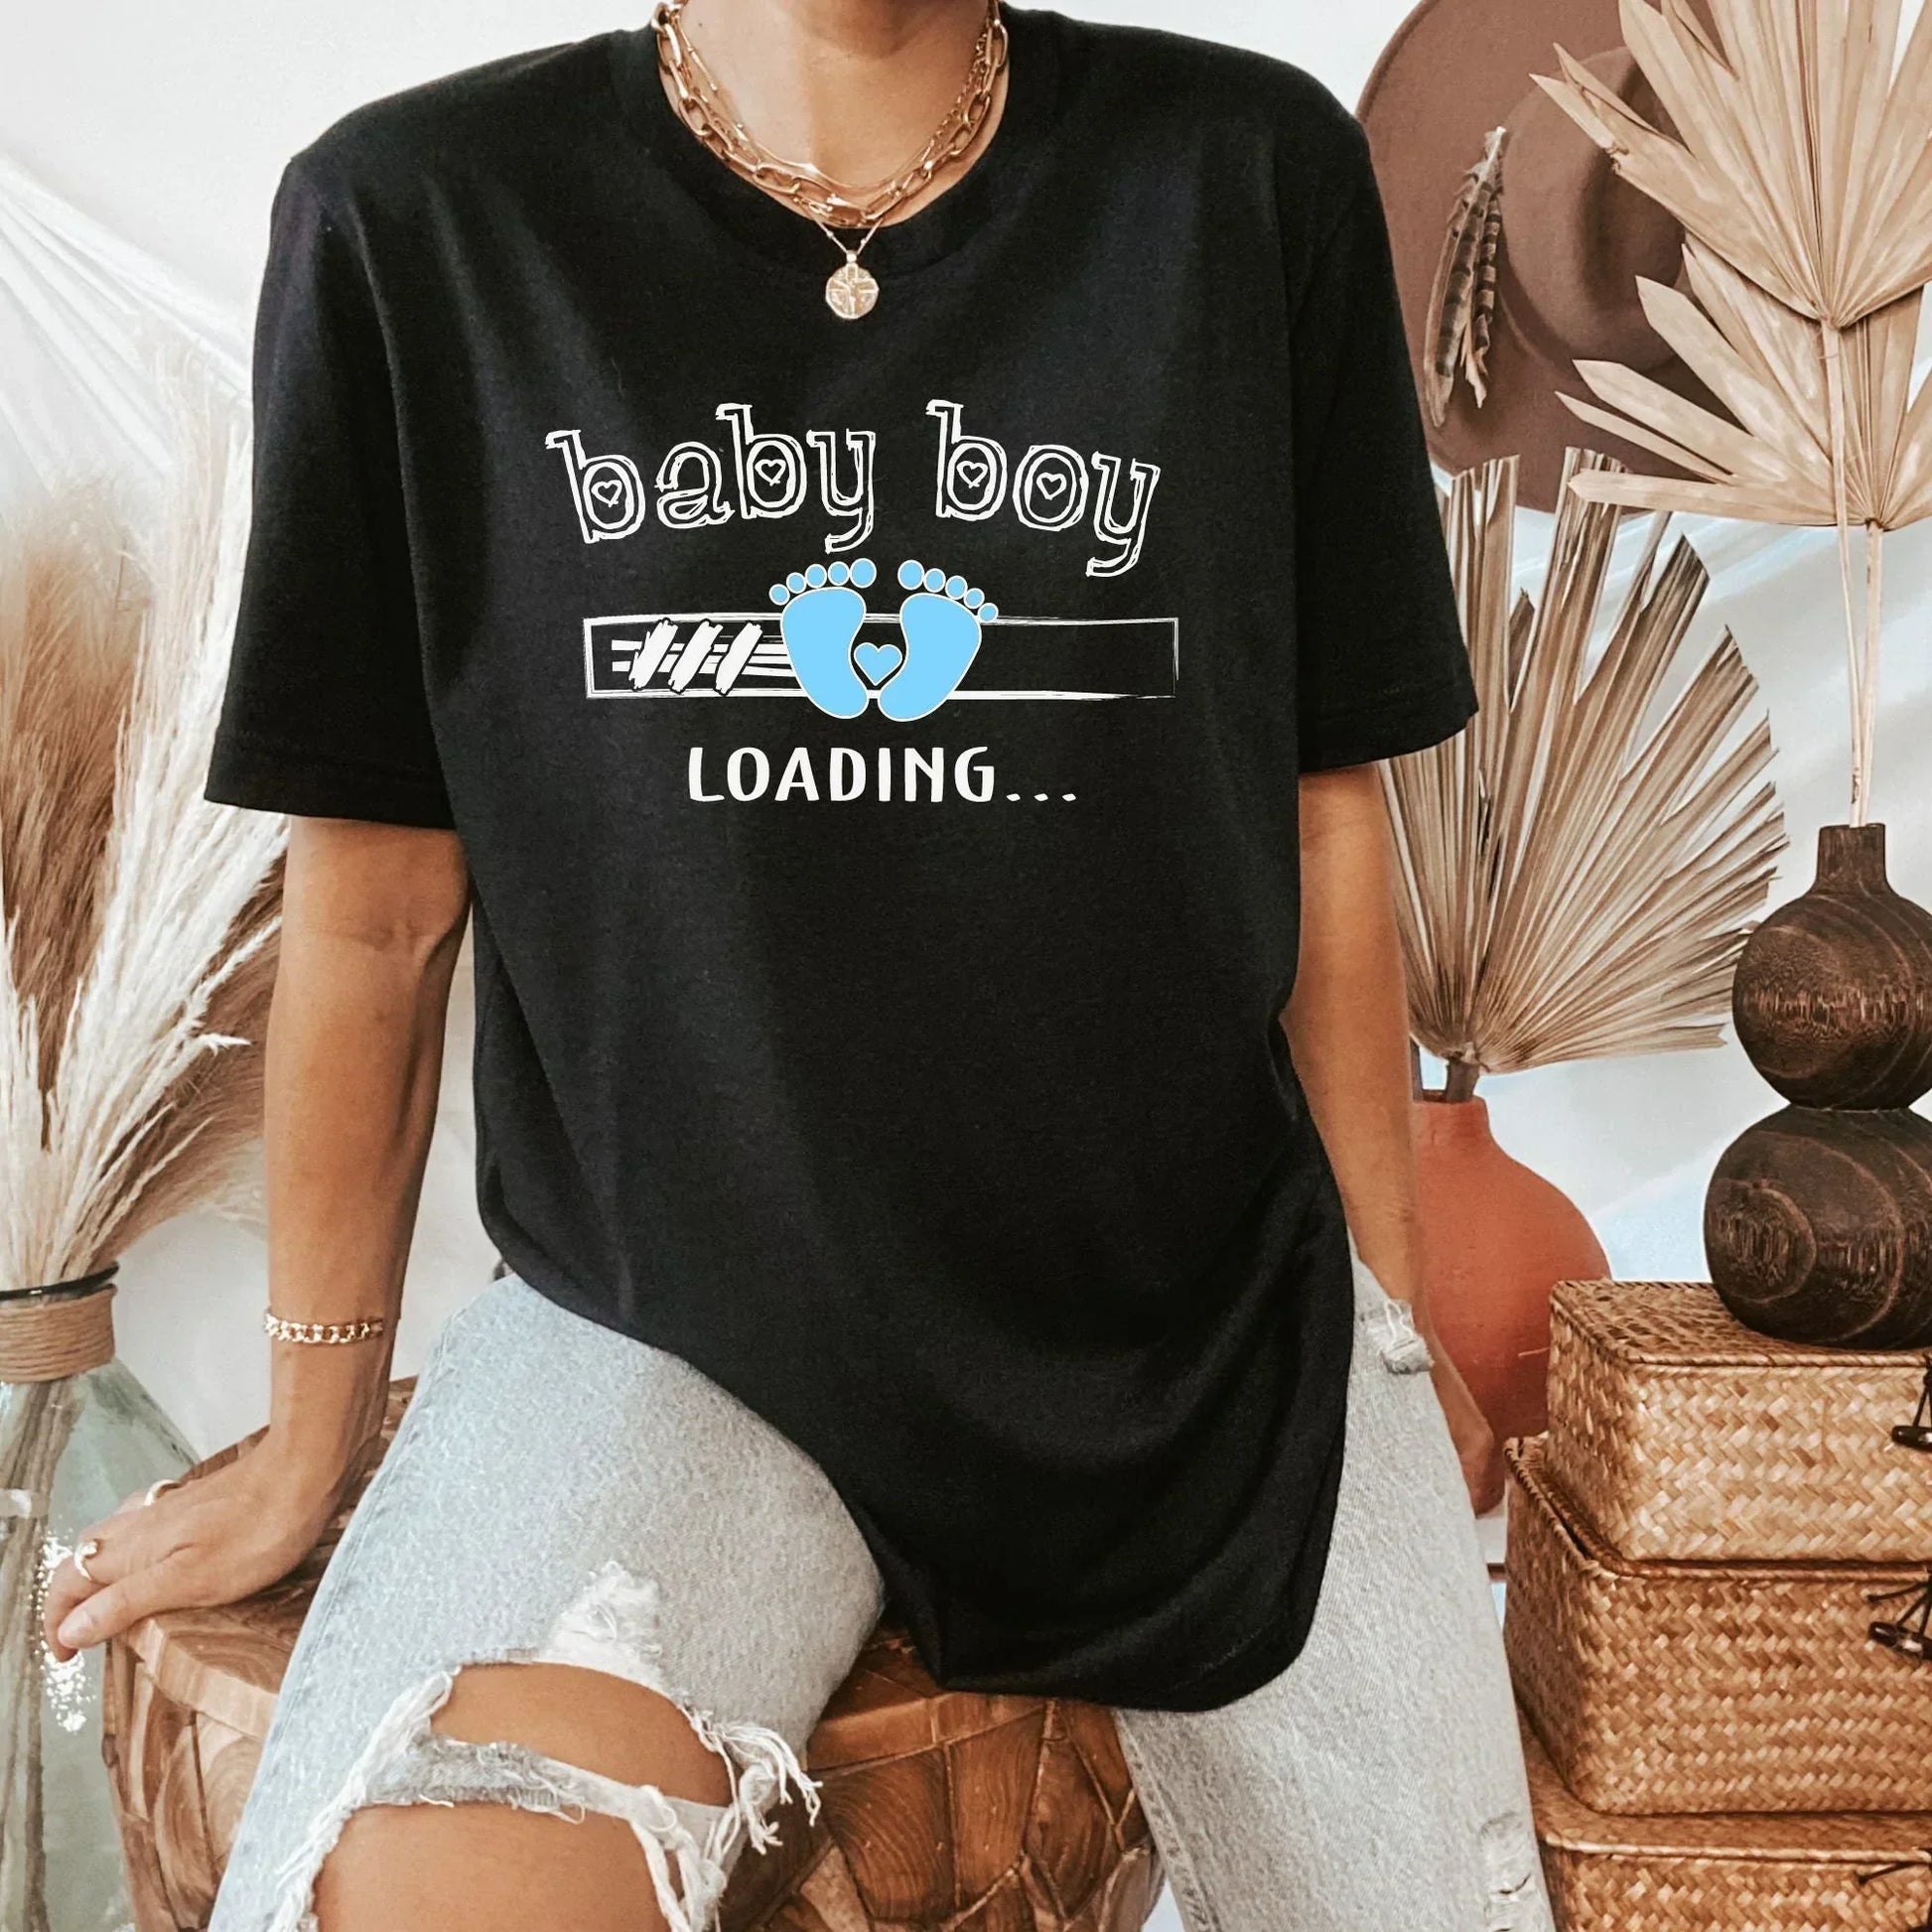 Baby Boy Loading, Cute Gender Reveal Shirt HMDesignStudioUS